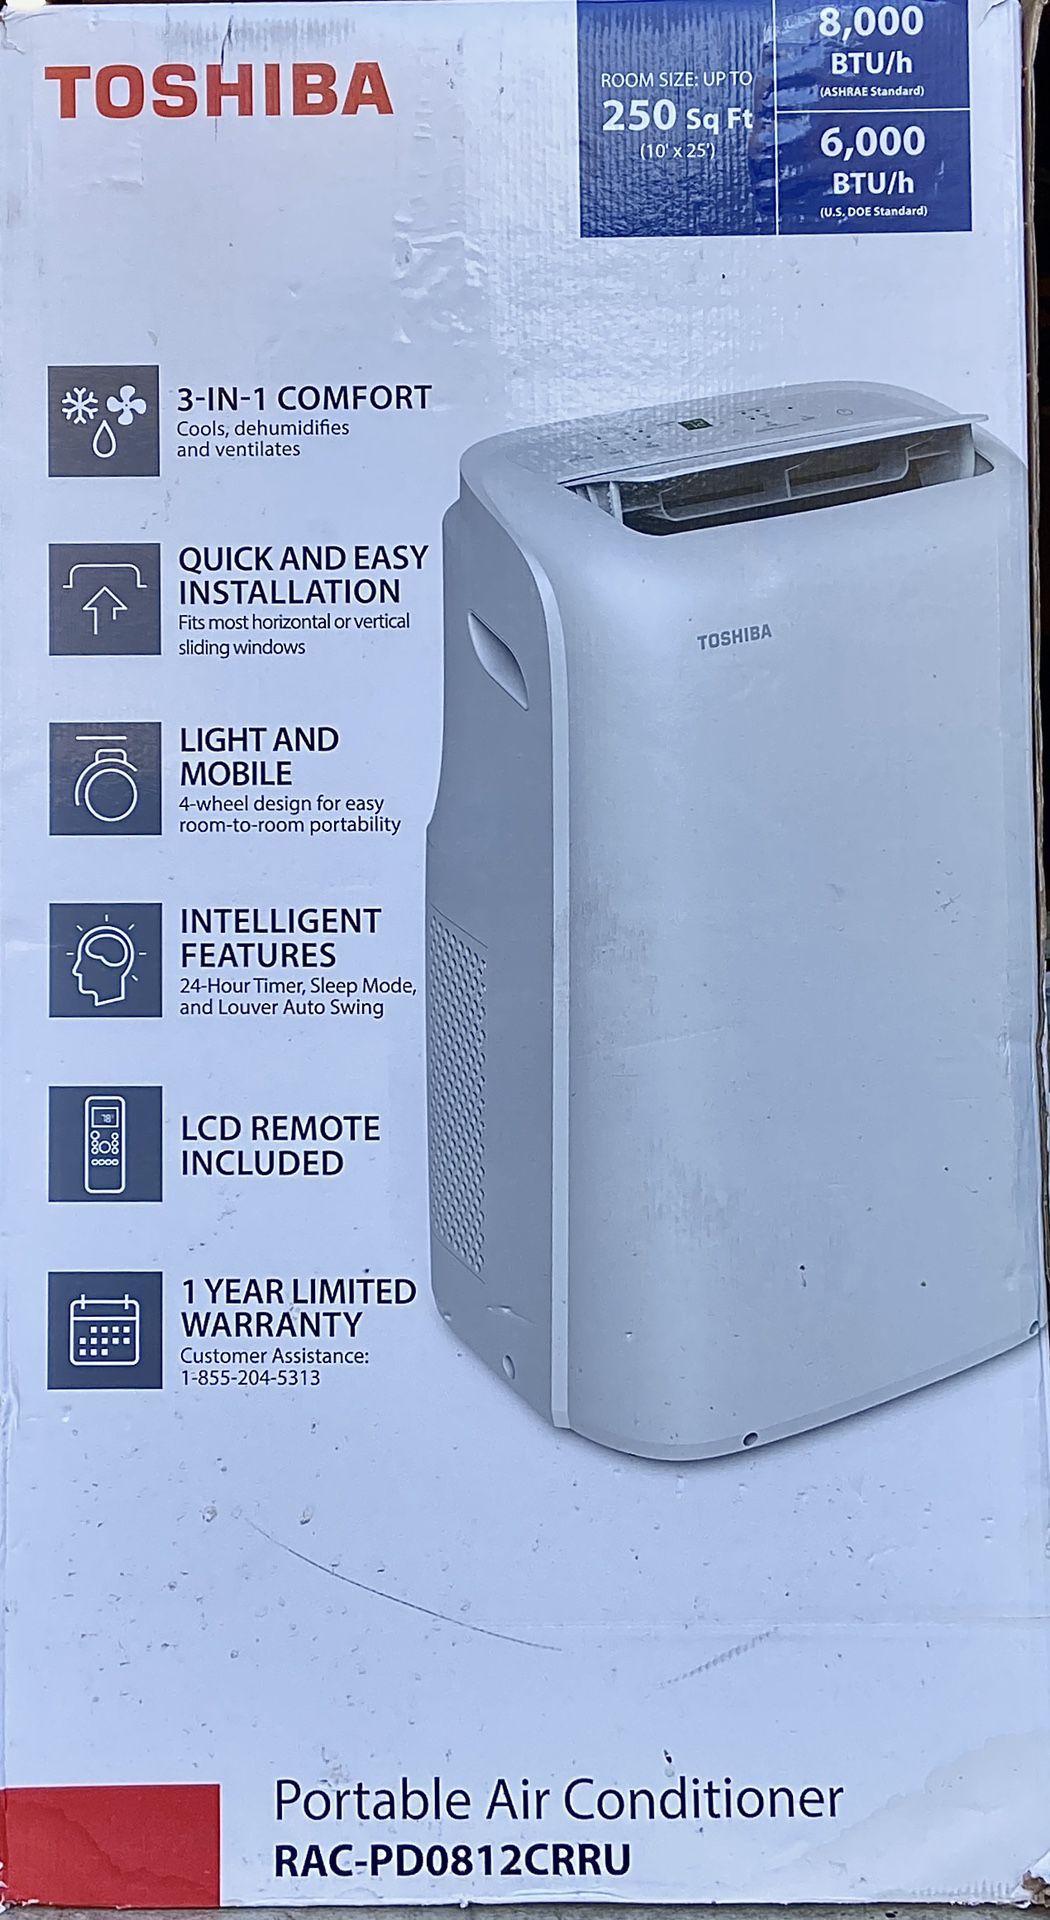 Portable Air Conditioner/Dehumidifier 8,000 BTU